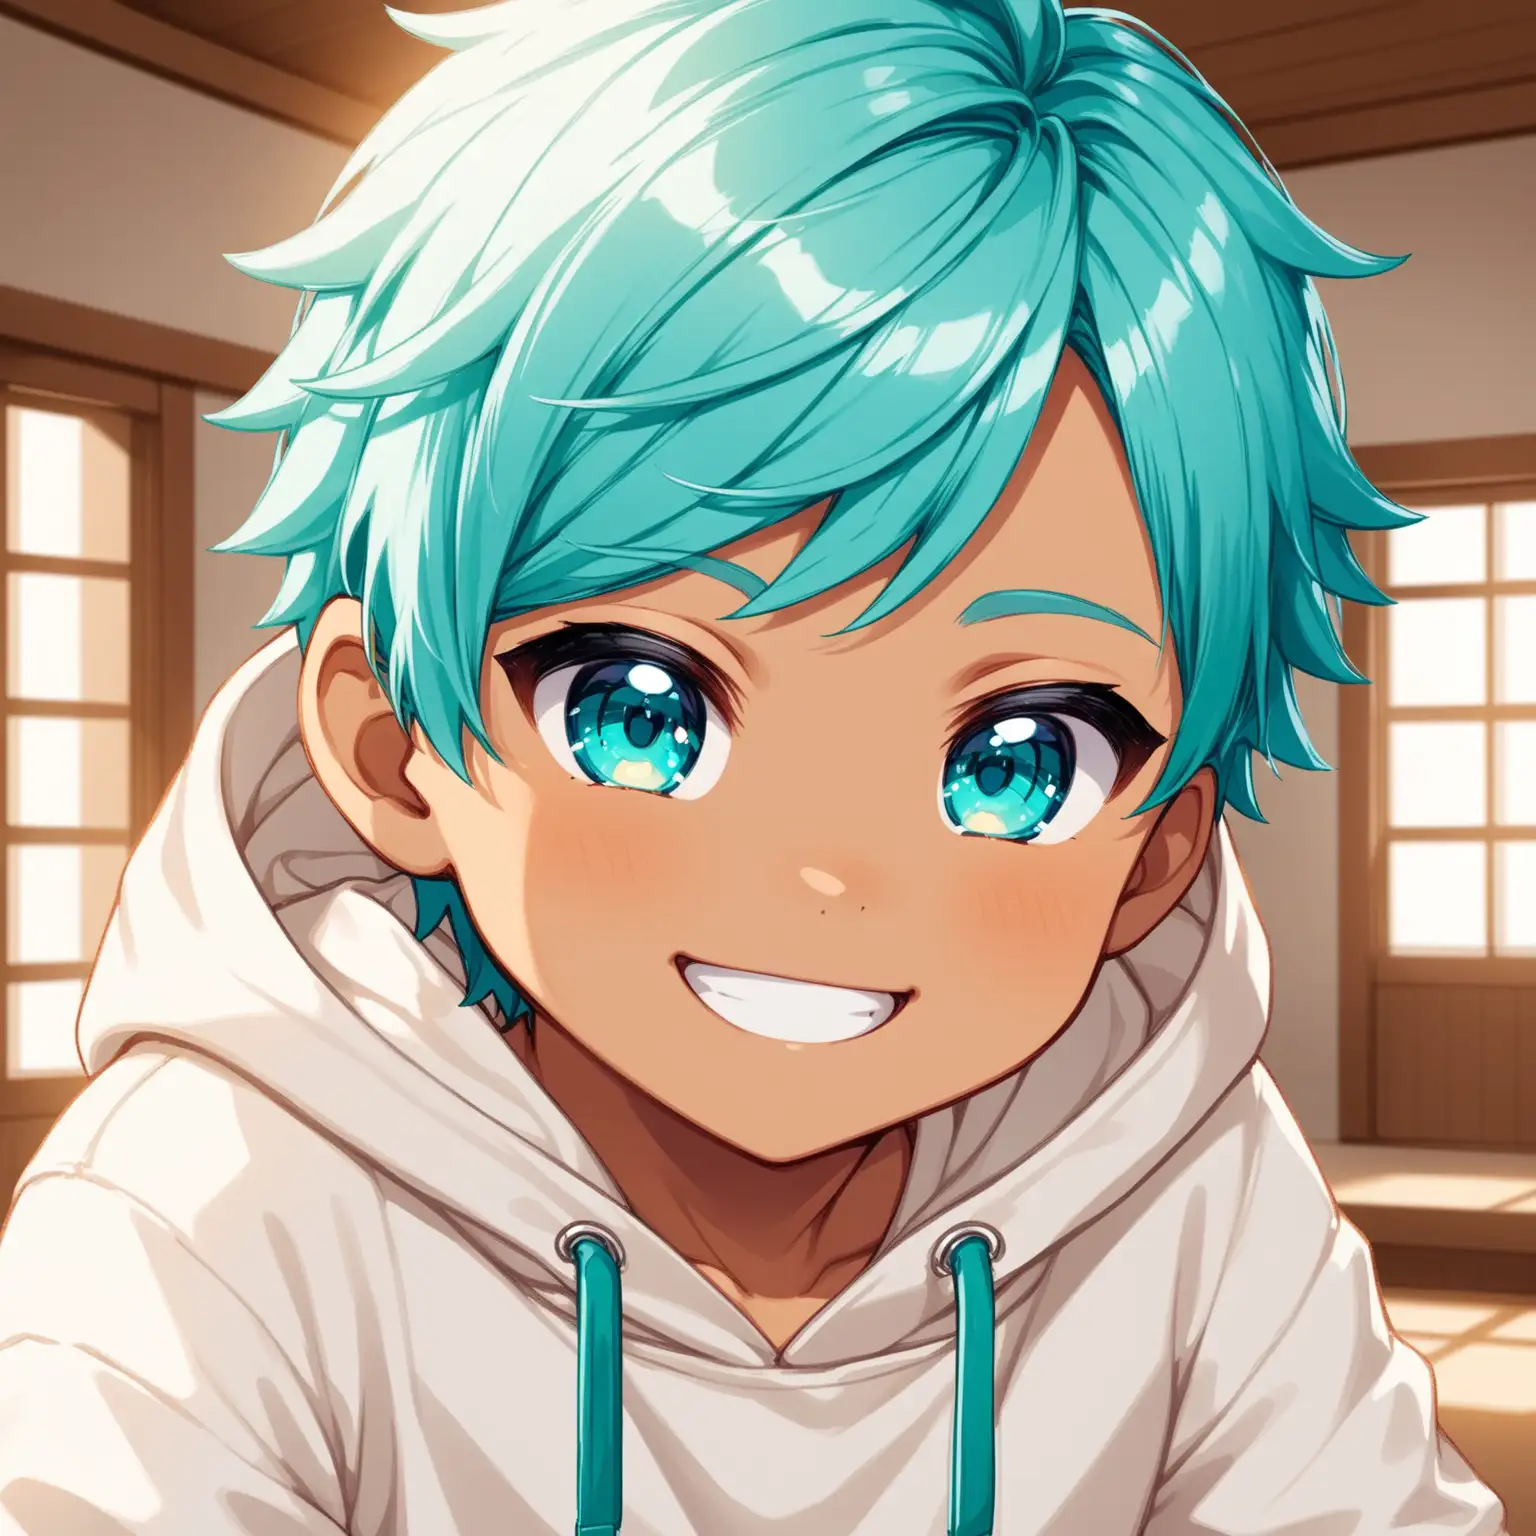 Chibi Anime Man with Aquamarine Hair Smiling in CloseUp Portrait